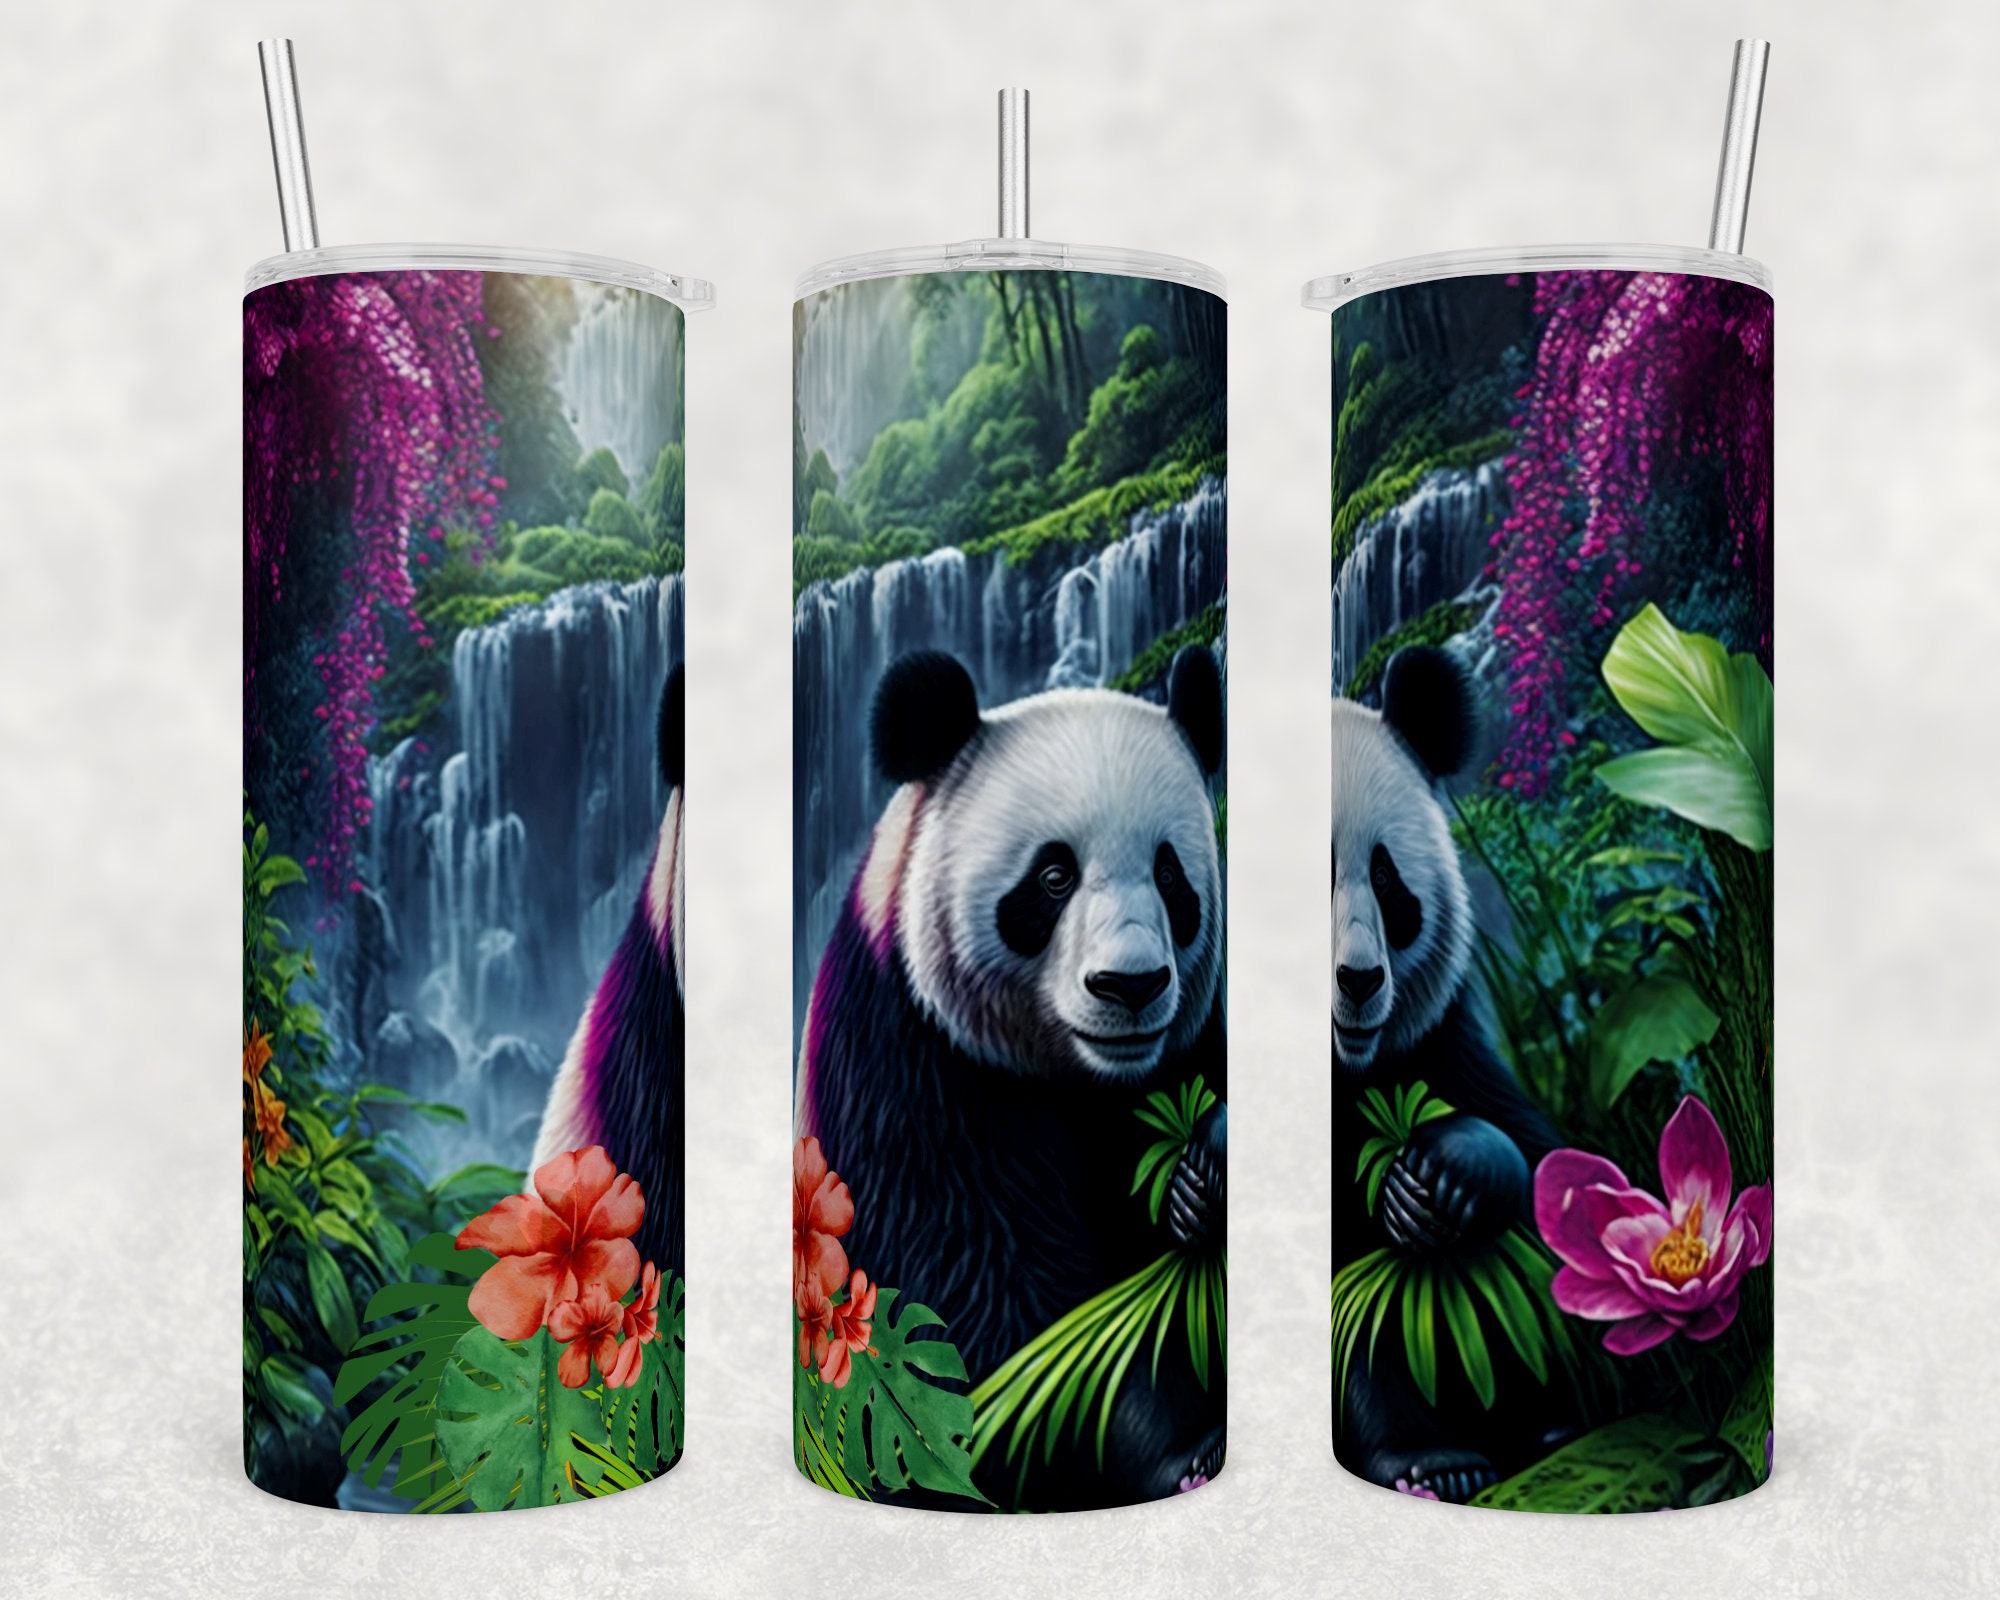 3D Cute Panda Tumbler 1 Graphic by Tumbler Wraps · Creative Fabrica